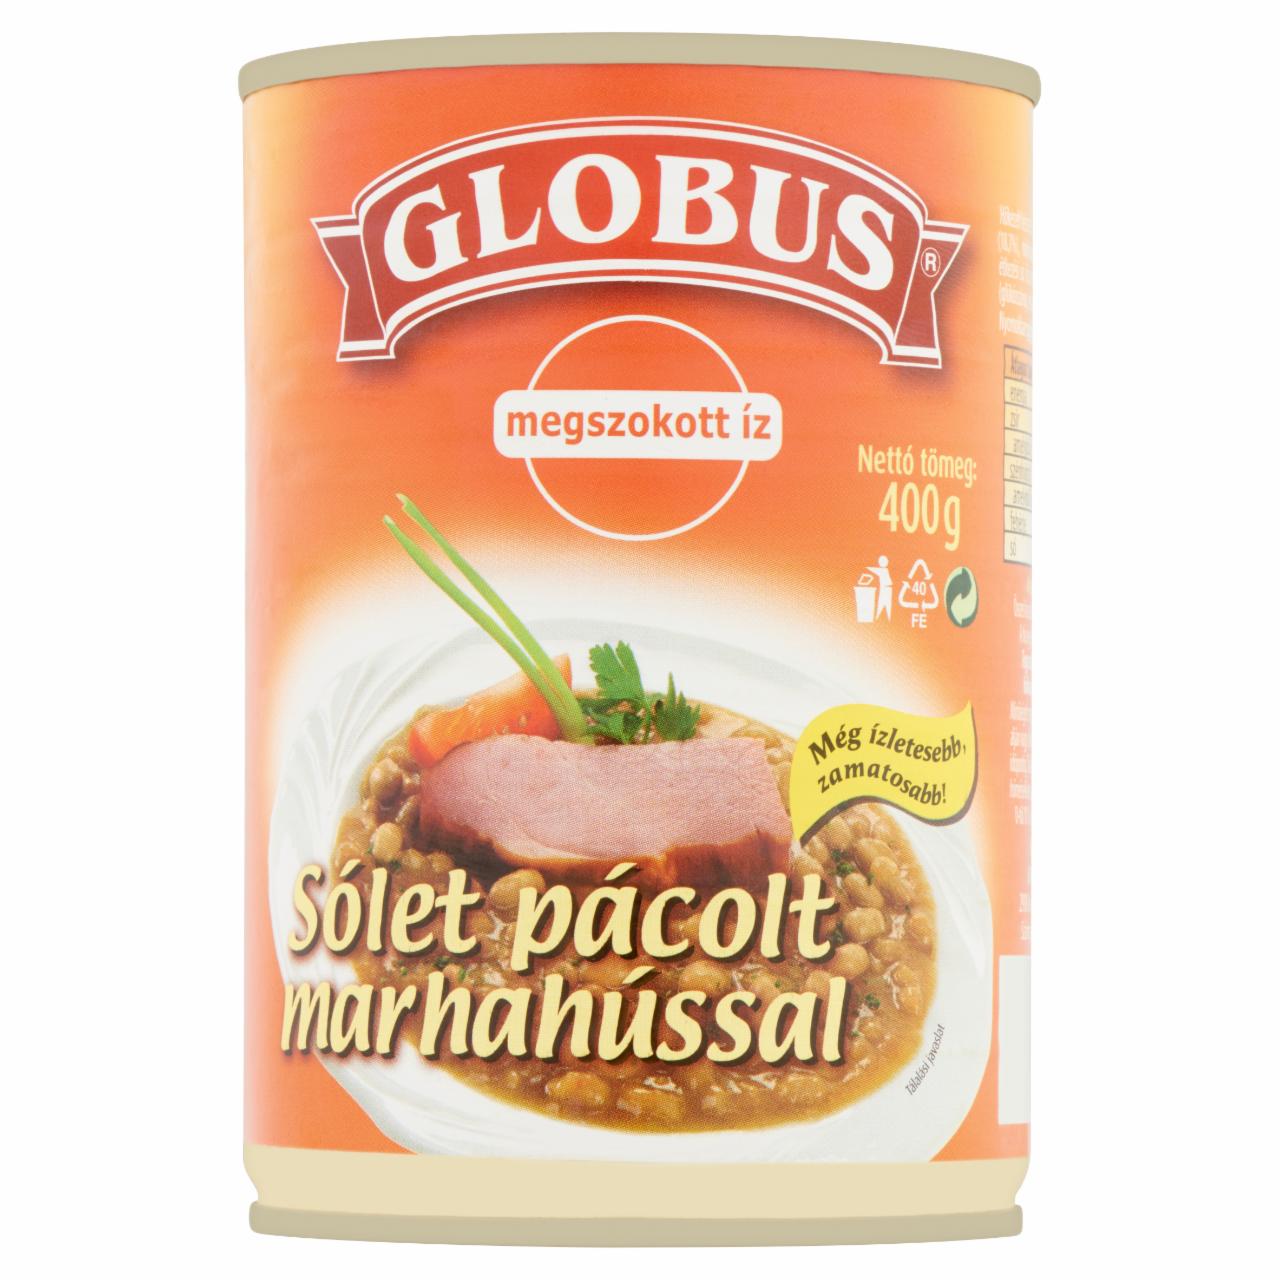 Képek - Globus sólet pácolt marhahússal 400 g